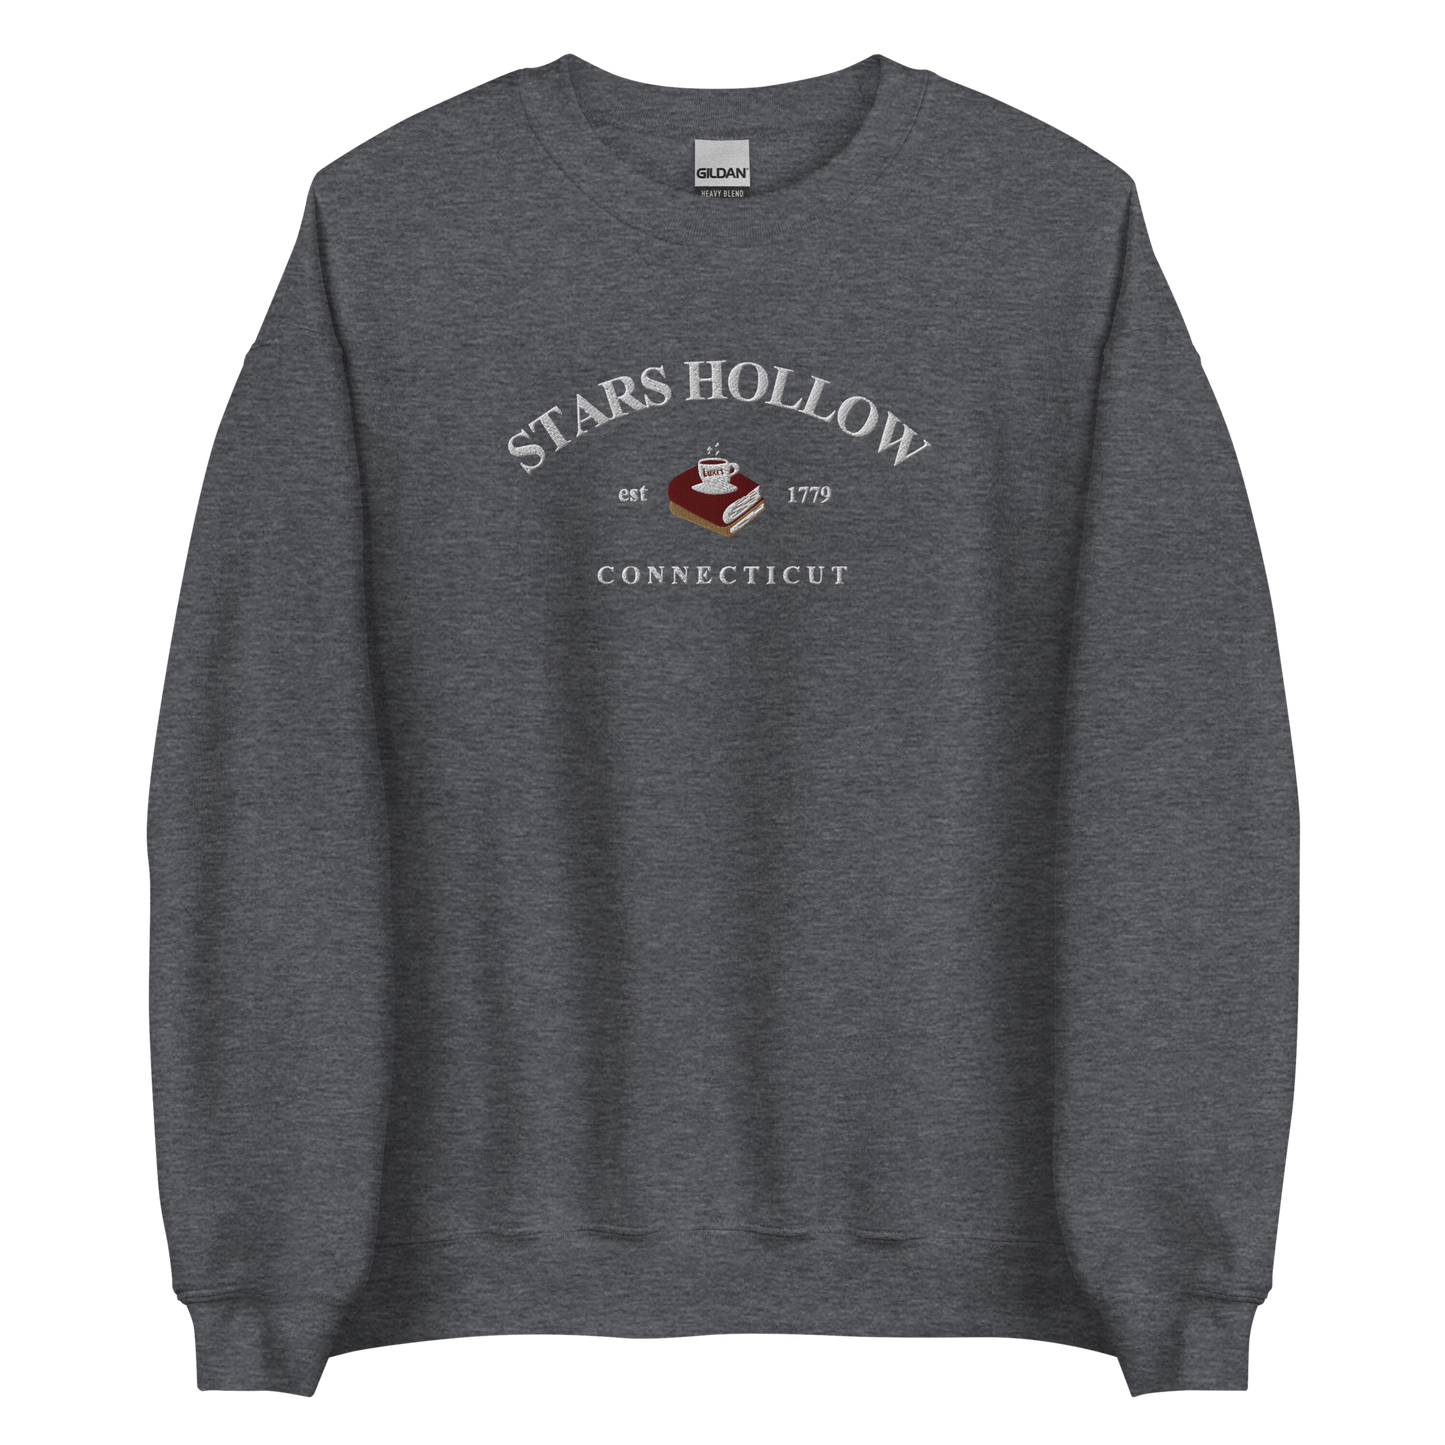 Stars Hollow Sweatshirt